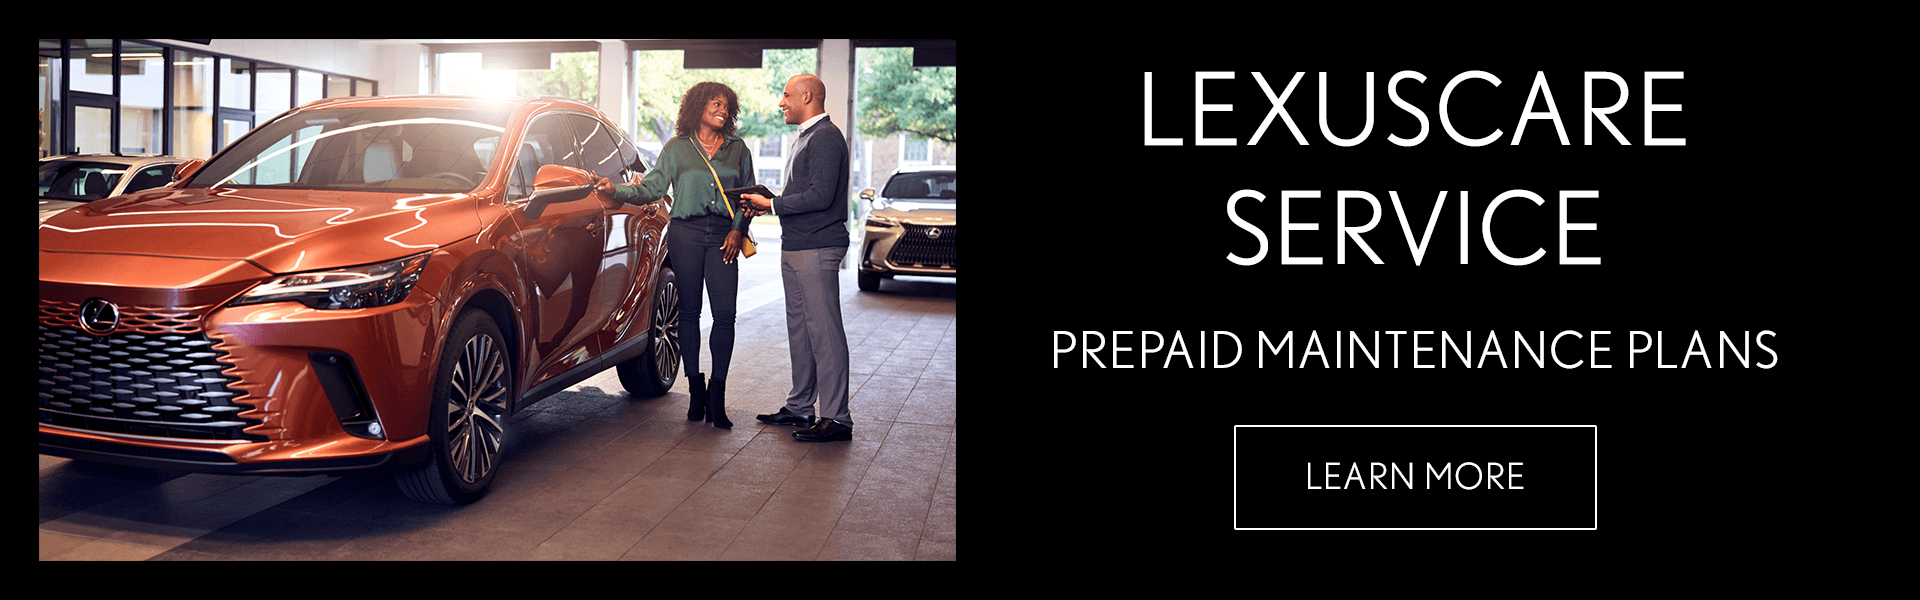 LexusCare Prepaid Maintenance